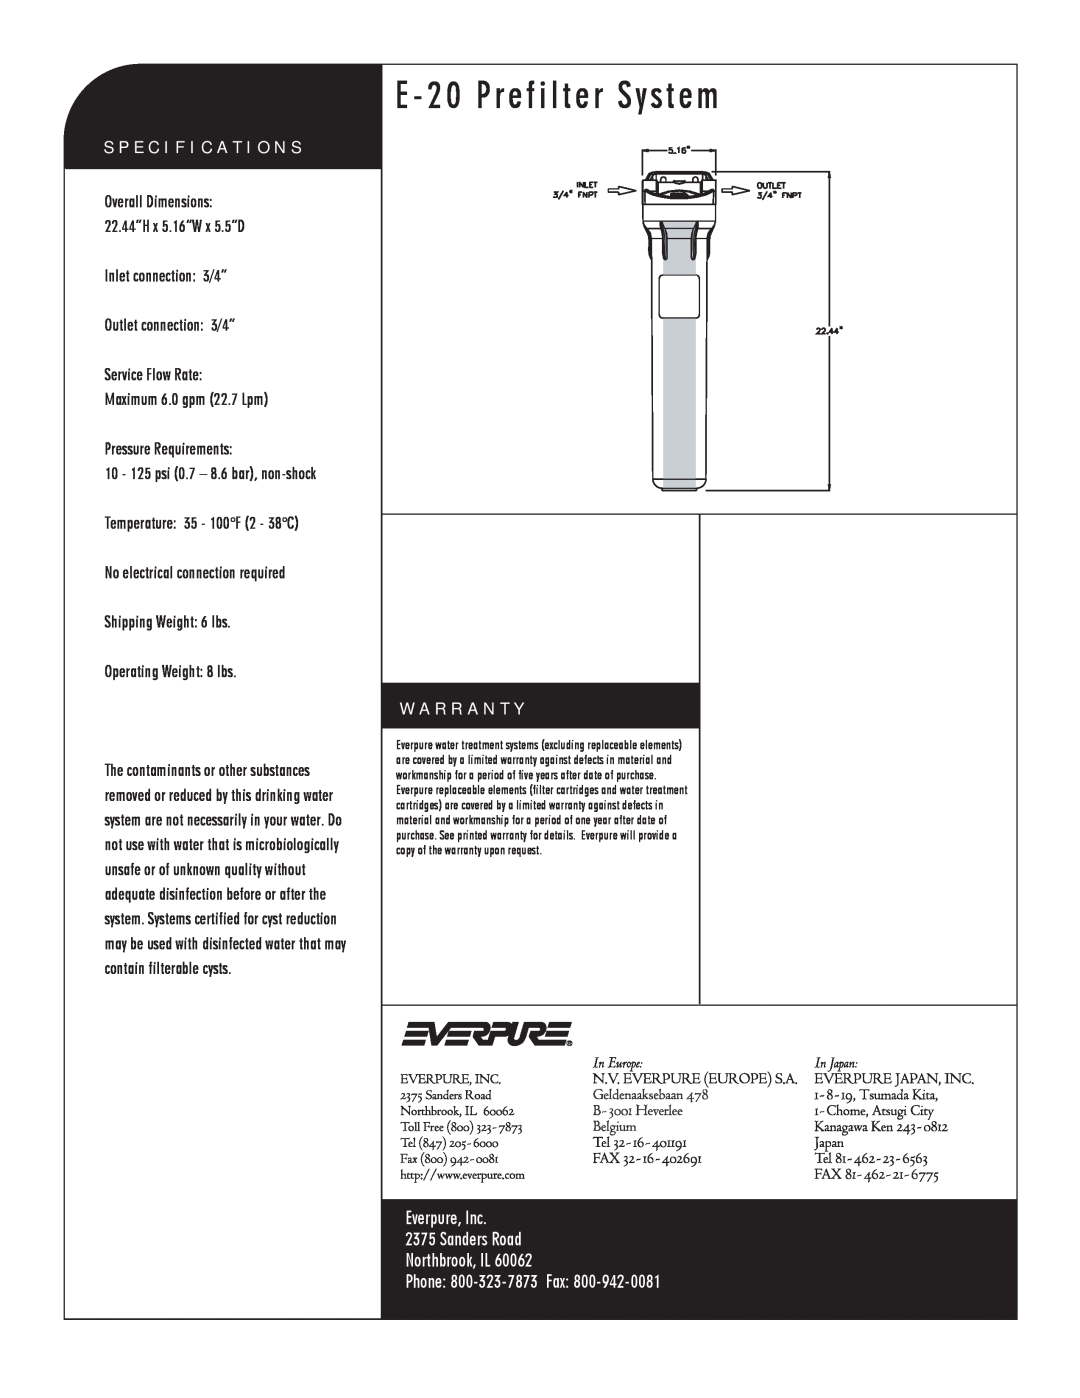 Everpure EV9795-90 manual Everpure, Inc 2375 Sanders Road Northbrook, IL Phone 800-323-7873 Fax, E - 20 Prefilter System 